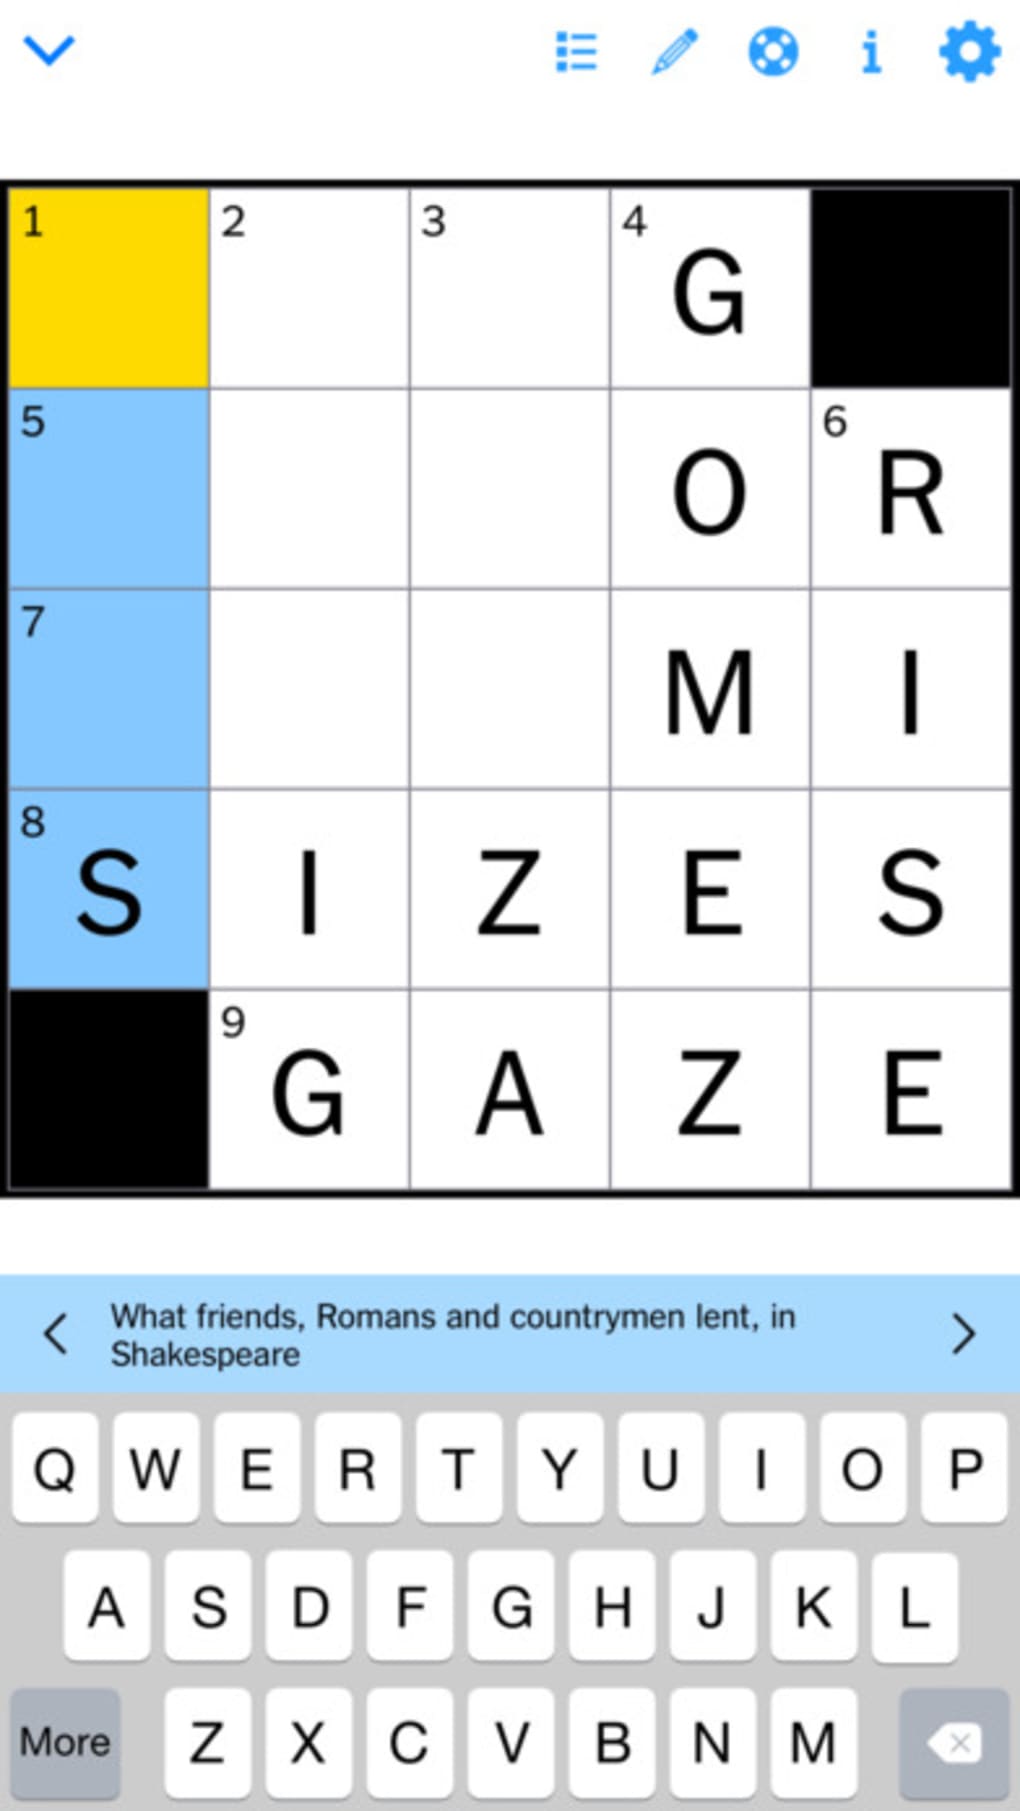 nytimes crossword puzzle online